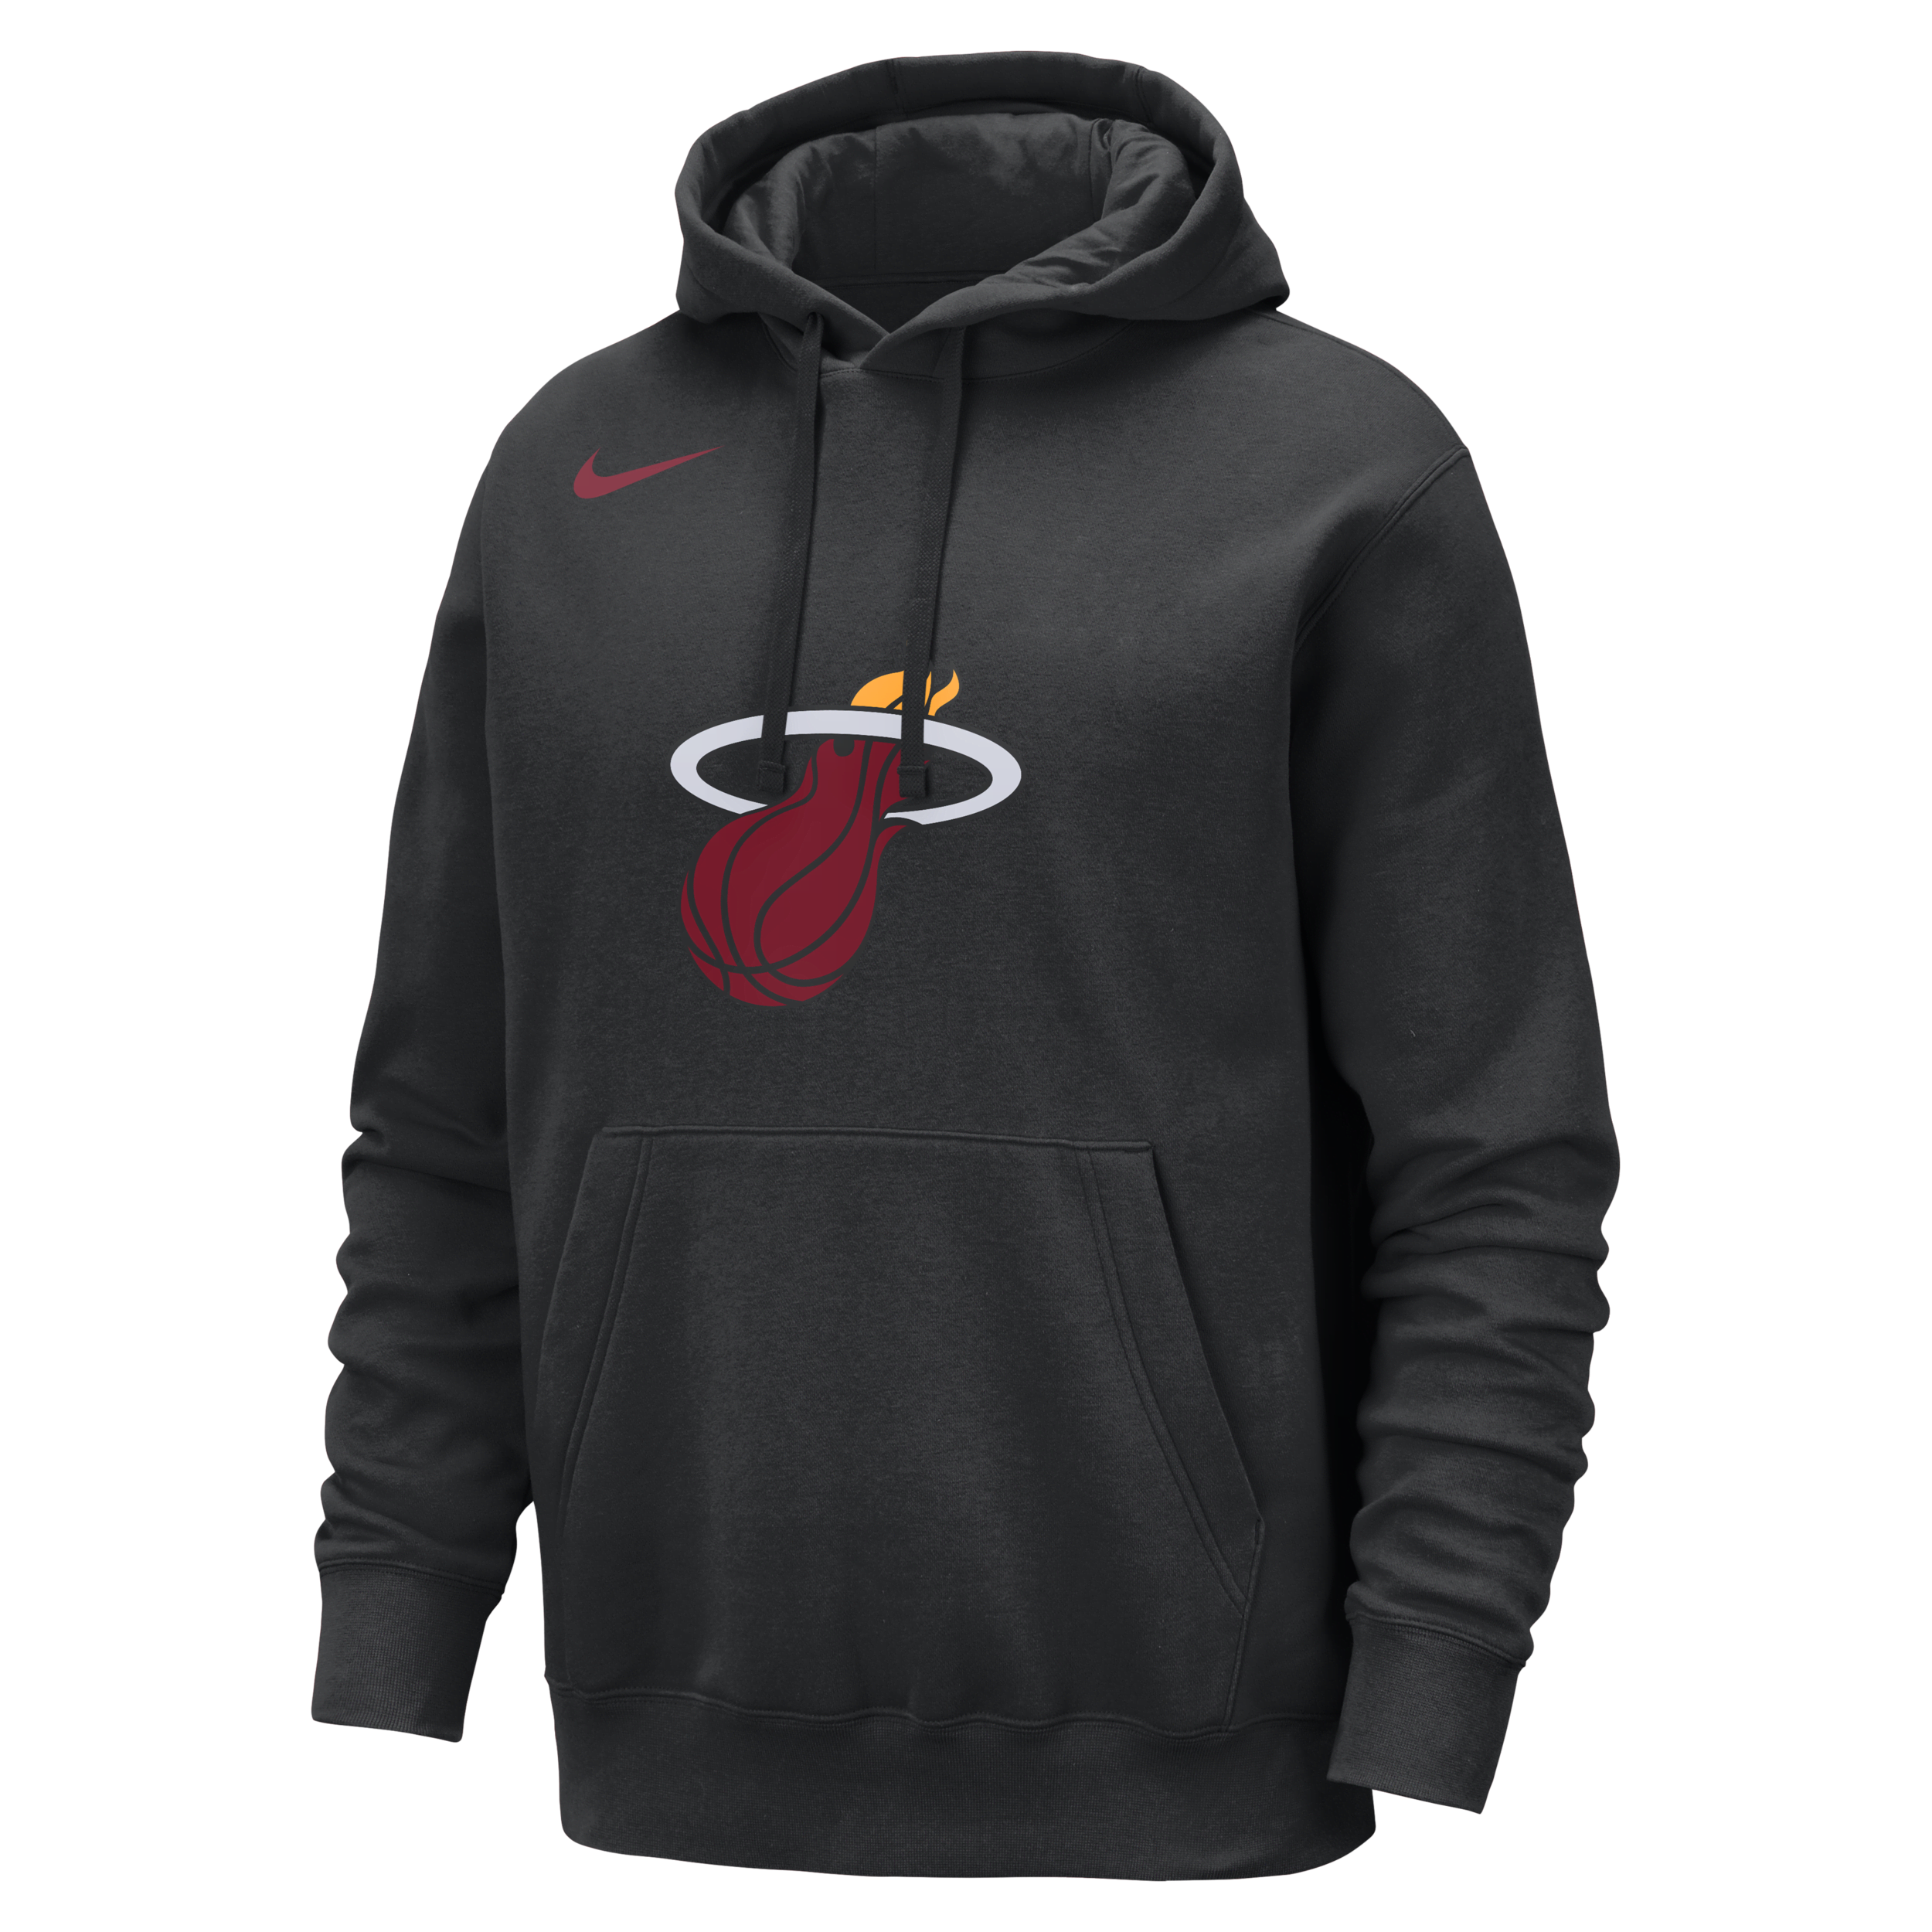 Miami Heat Club Sudadera con capucha Nike de la NBA - Hombre - Negro